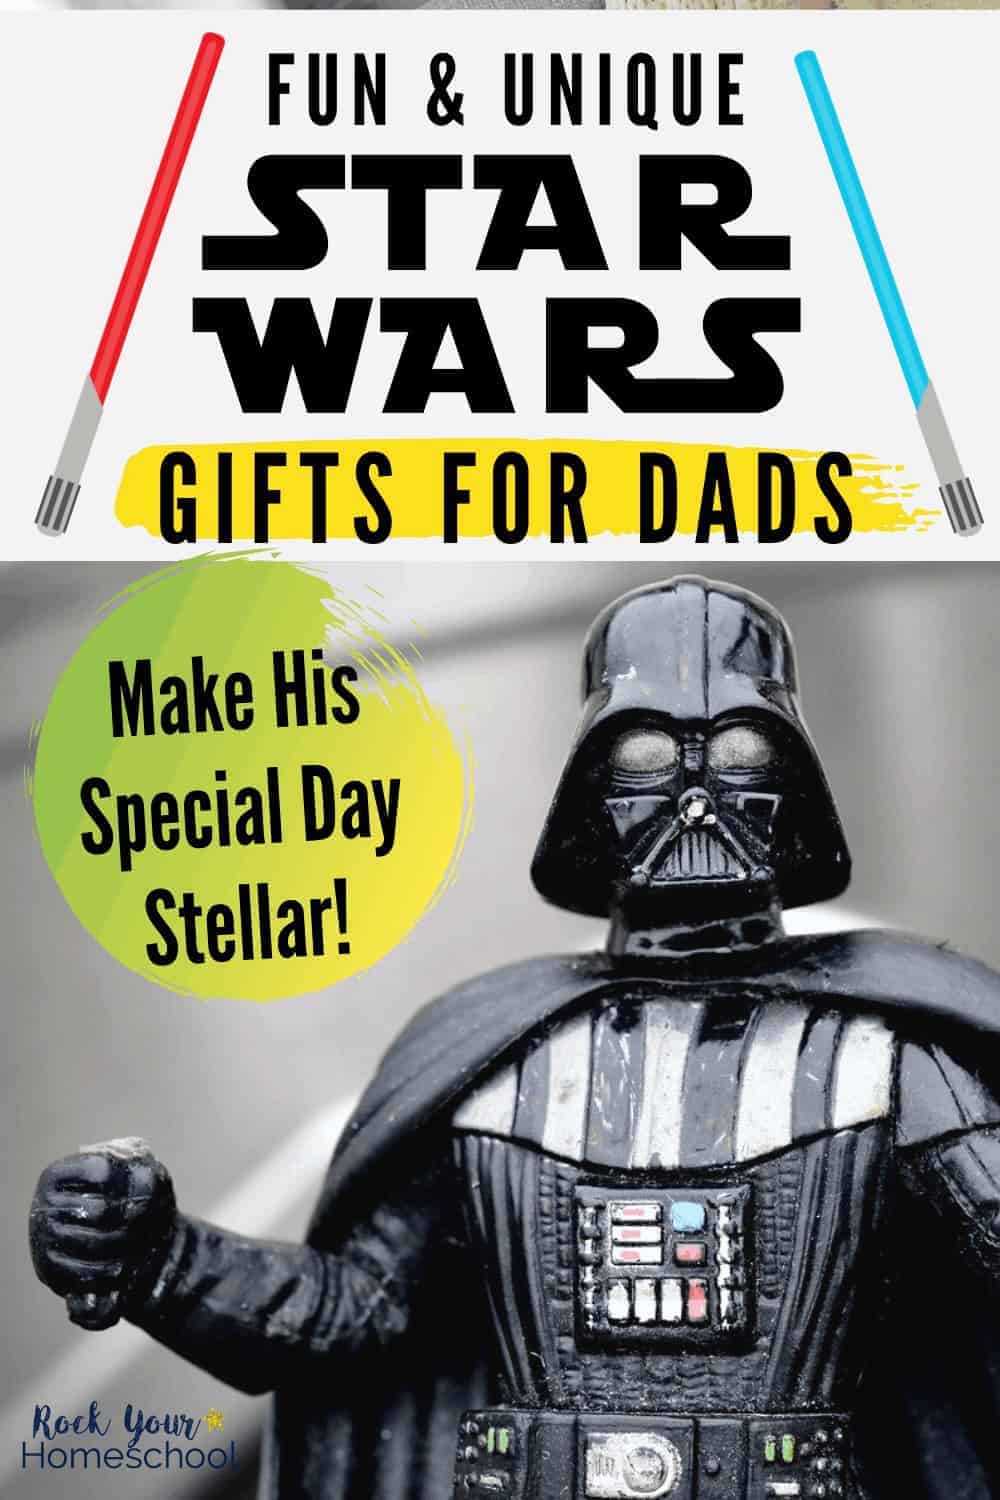 Fun & Unique Star Wars Father’s Day Gift Ideas